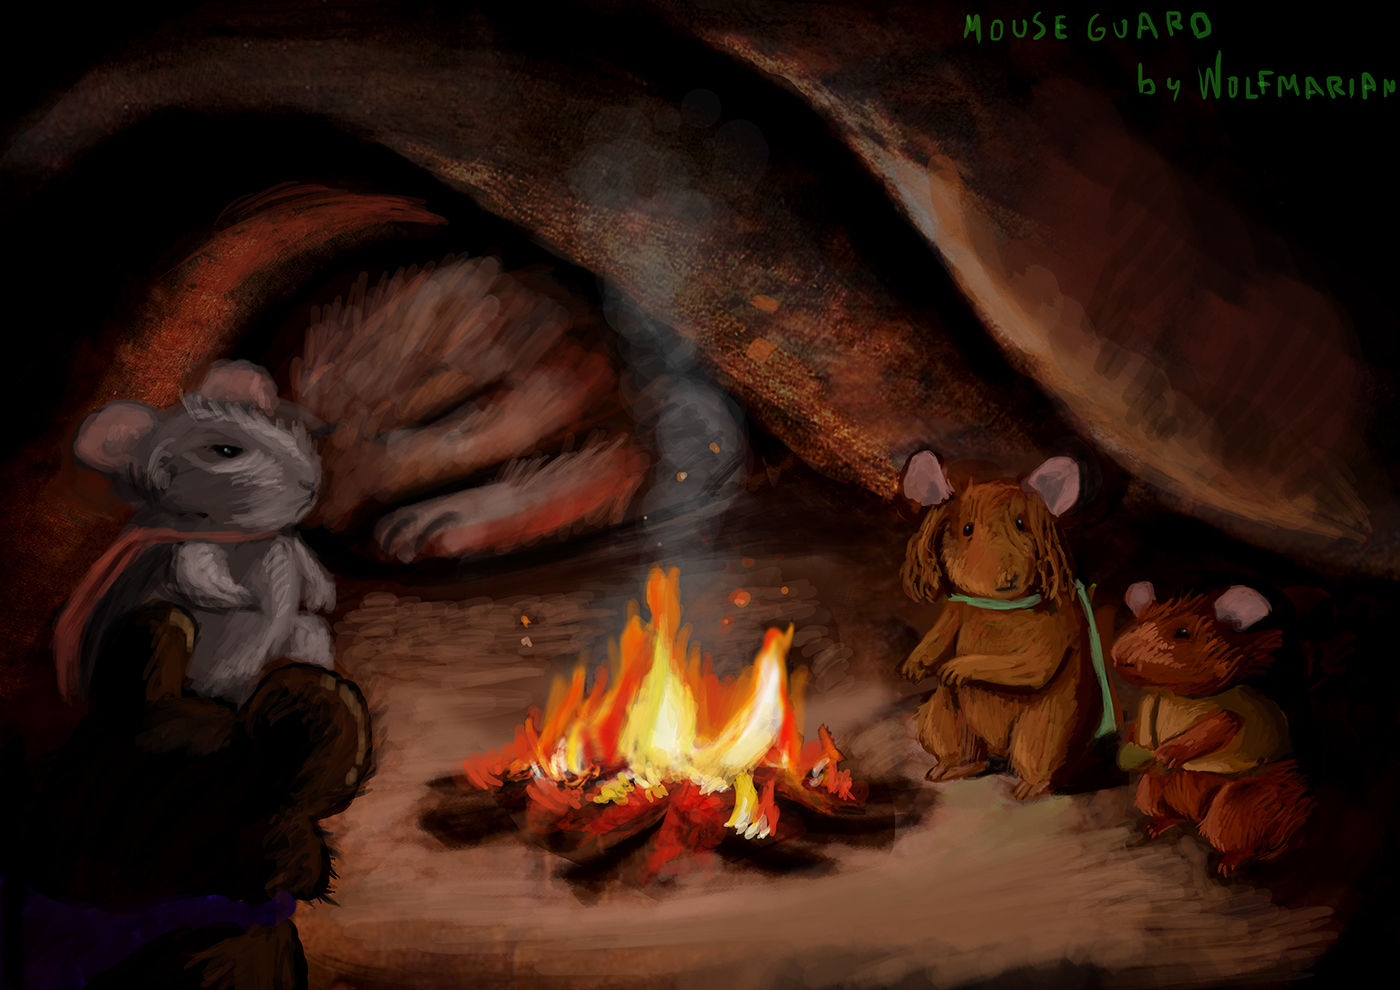 rabbit mouse guard Roleplay scene fireplace warm lights resting ILLUSTRATION 